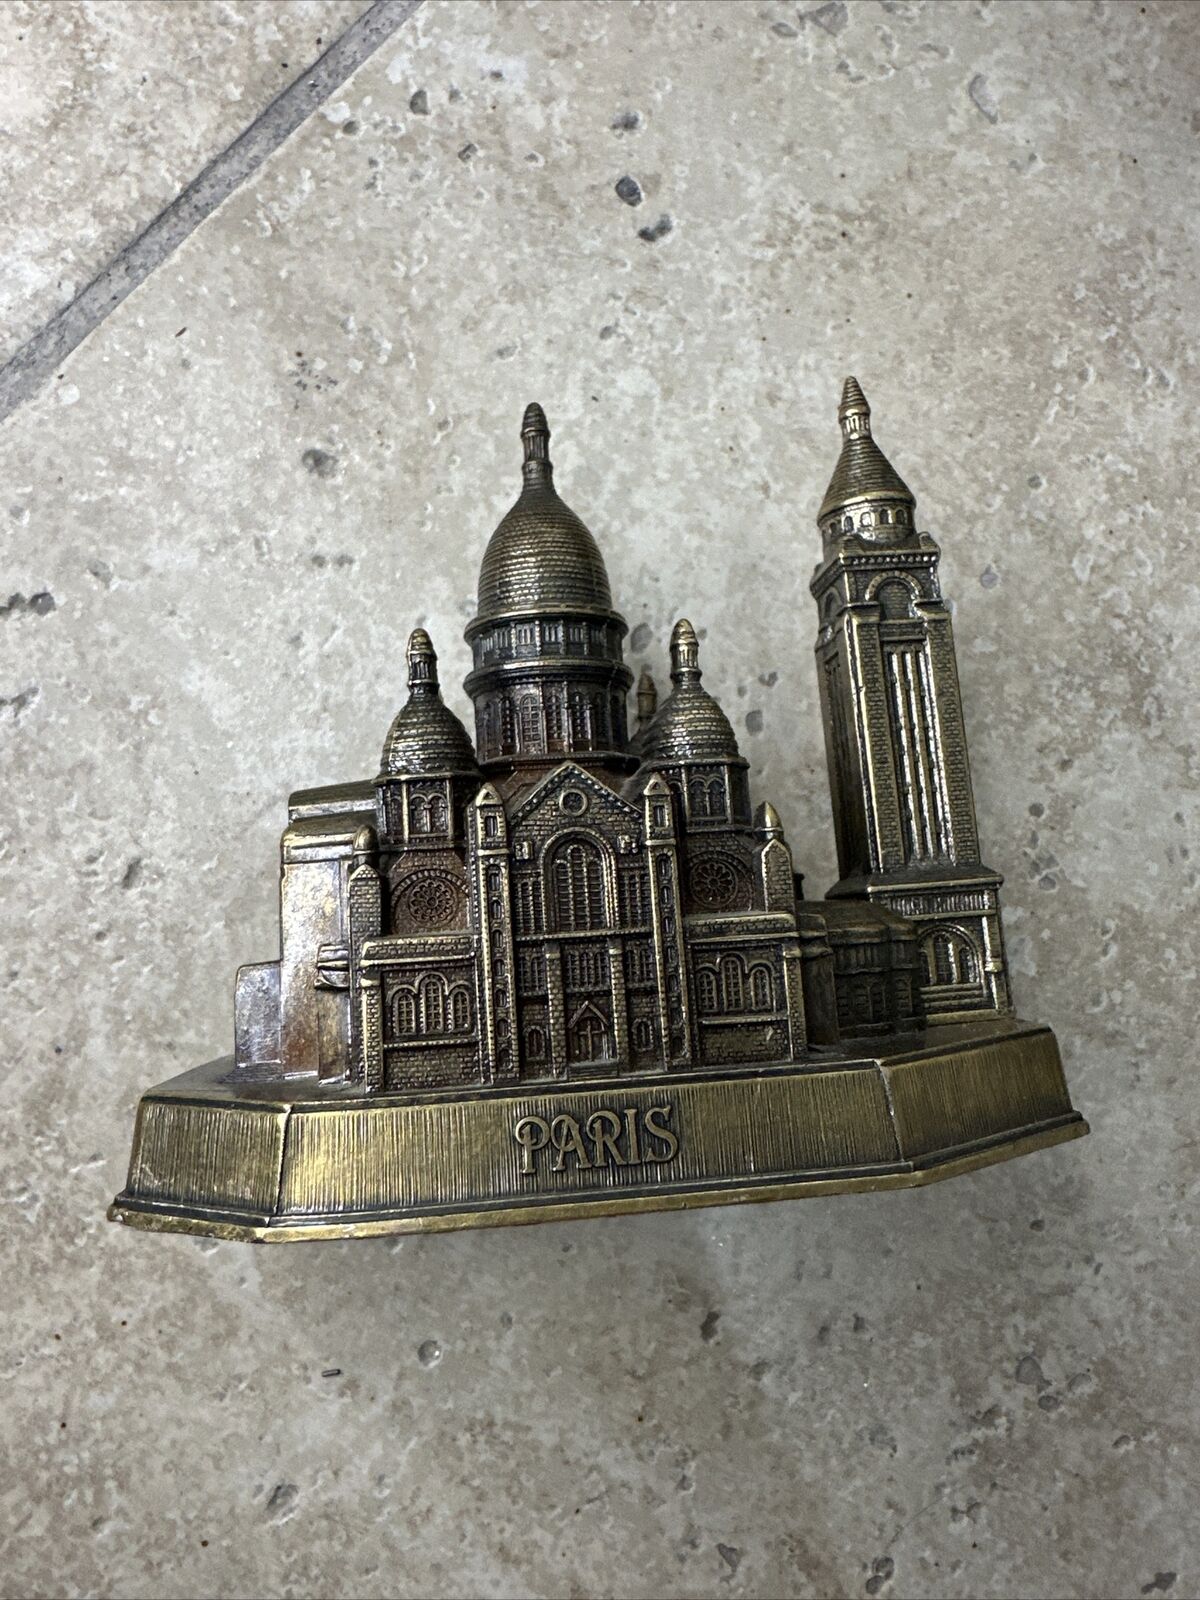 R&S Paris France Sacre Coeur Pewter/Metal PARIS Figurine 4